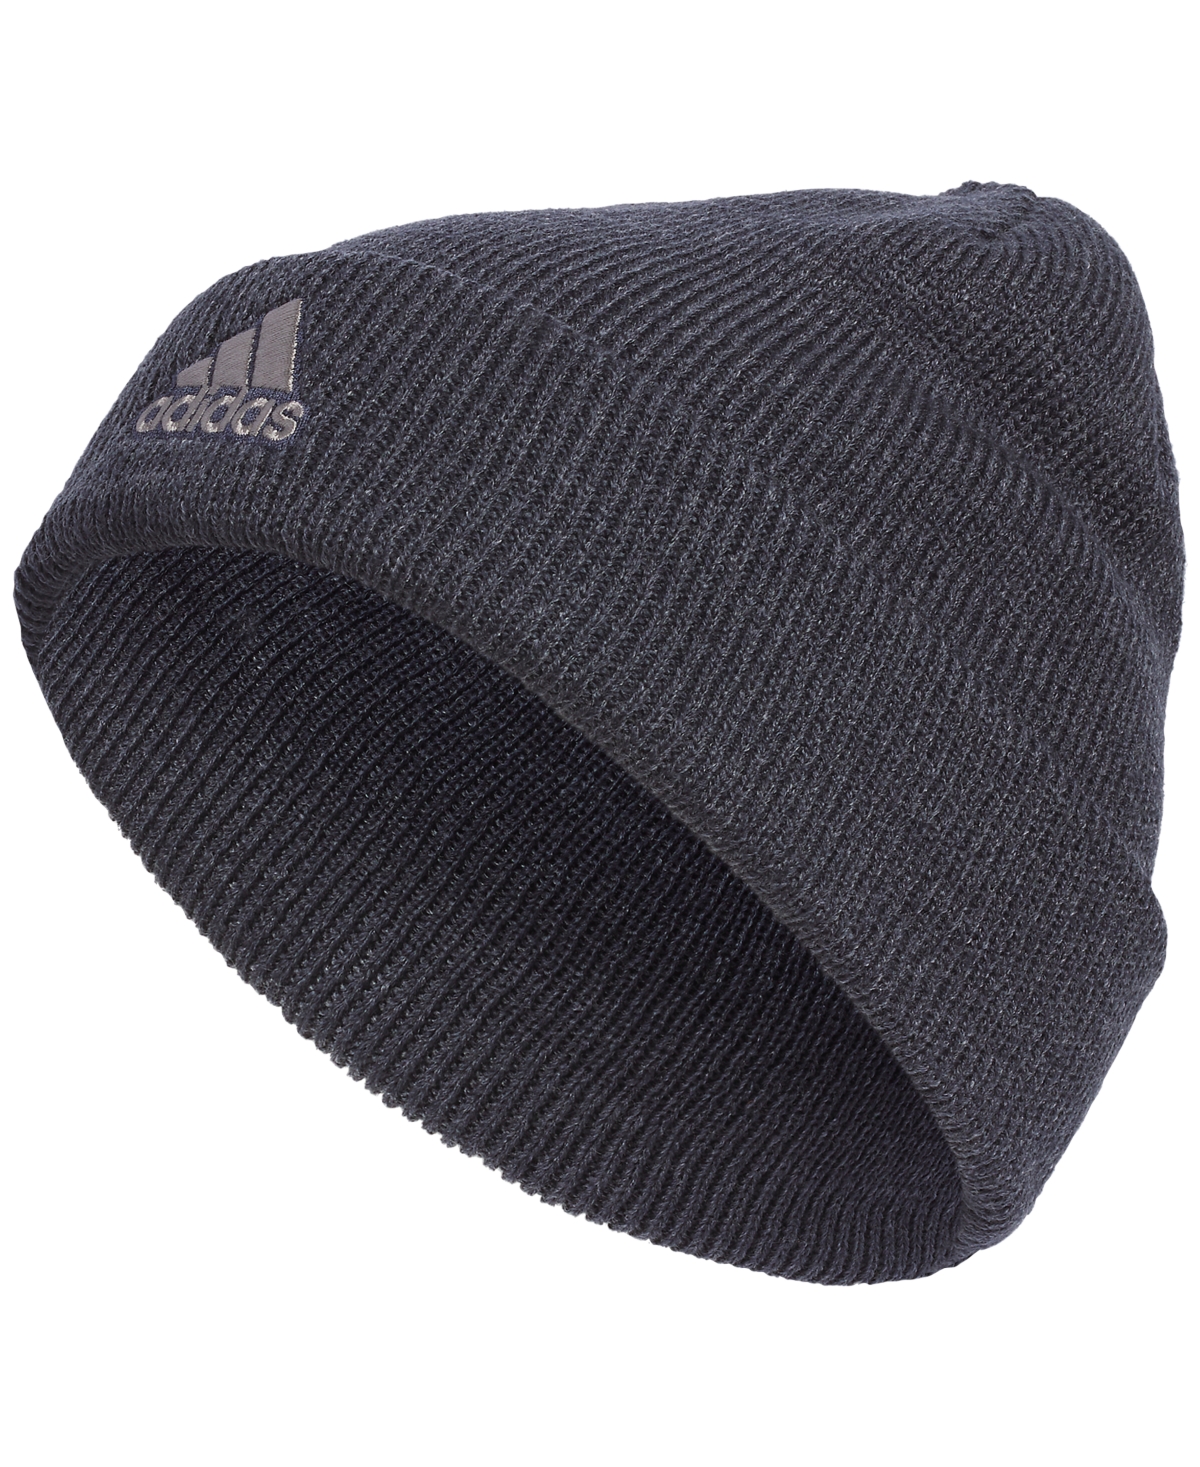 Adidas Originals Men's Team Issue Folded Knit Beanie In Navy